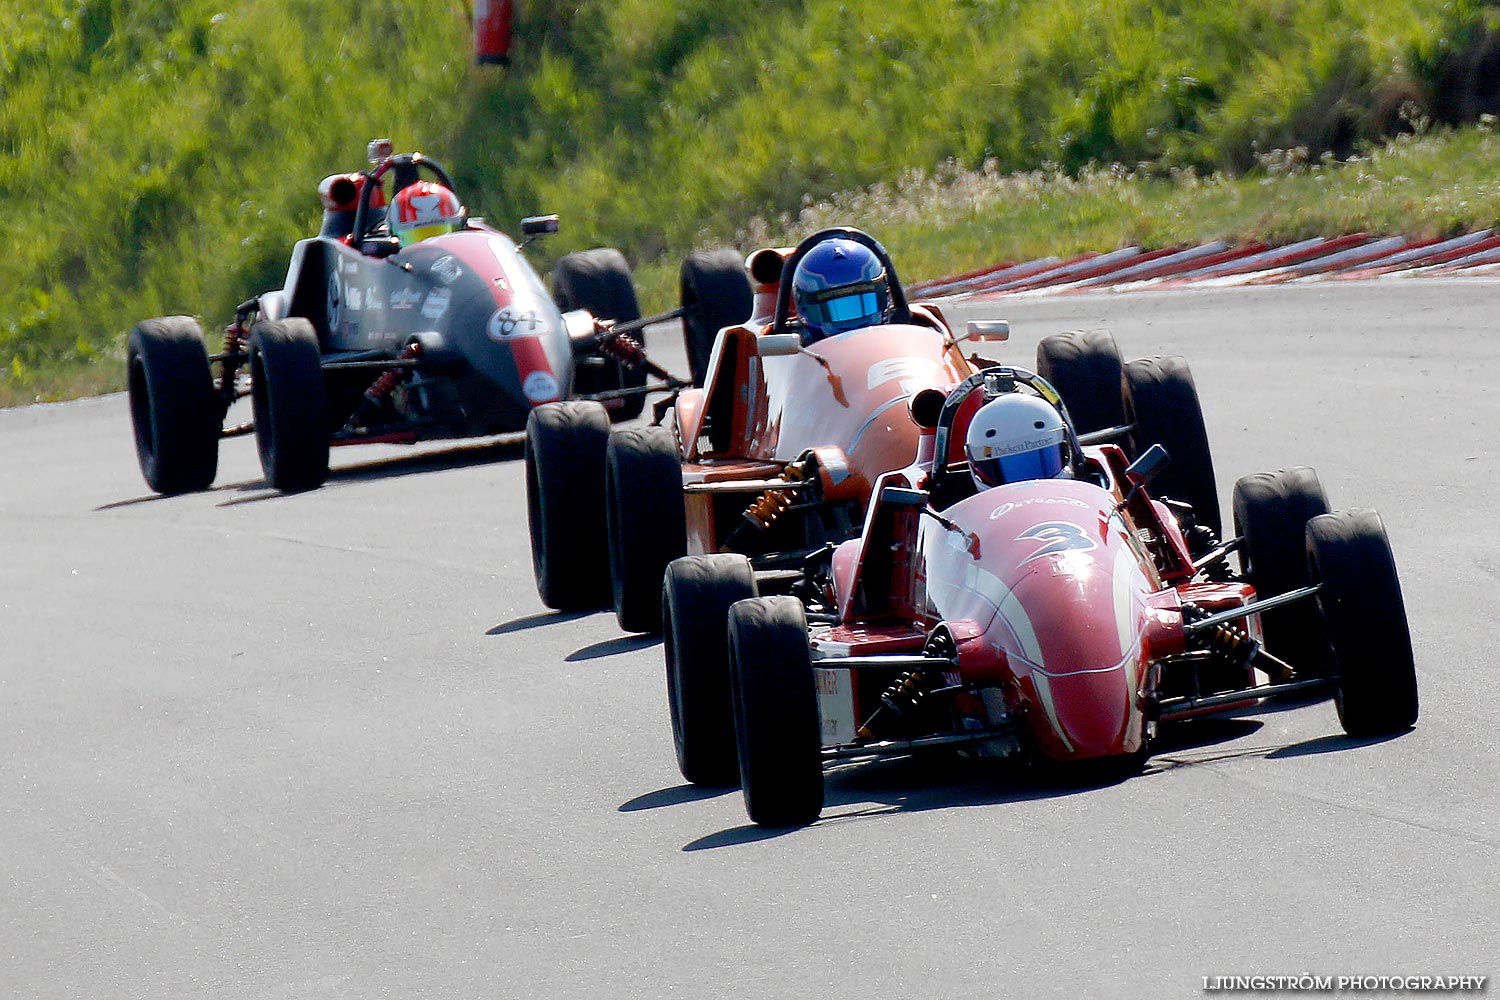 SSK Raceweek,mix,Kinnekulle Ring,Götene,Sverige,Motorsport,,2014,90285